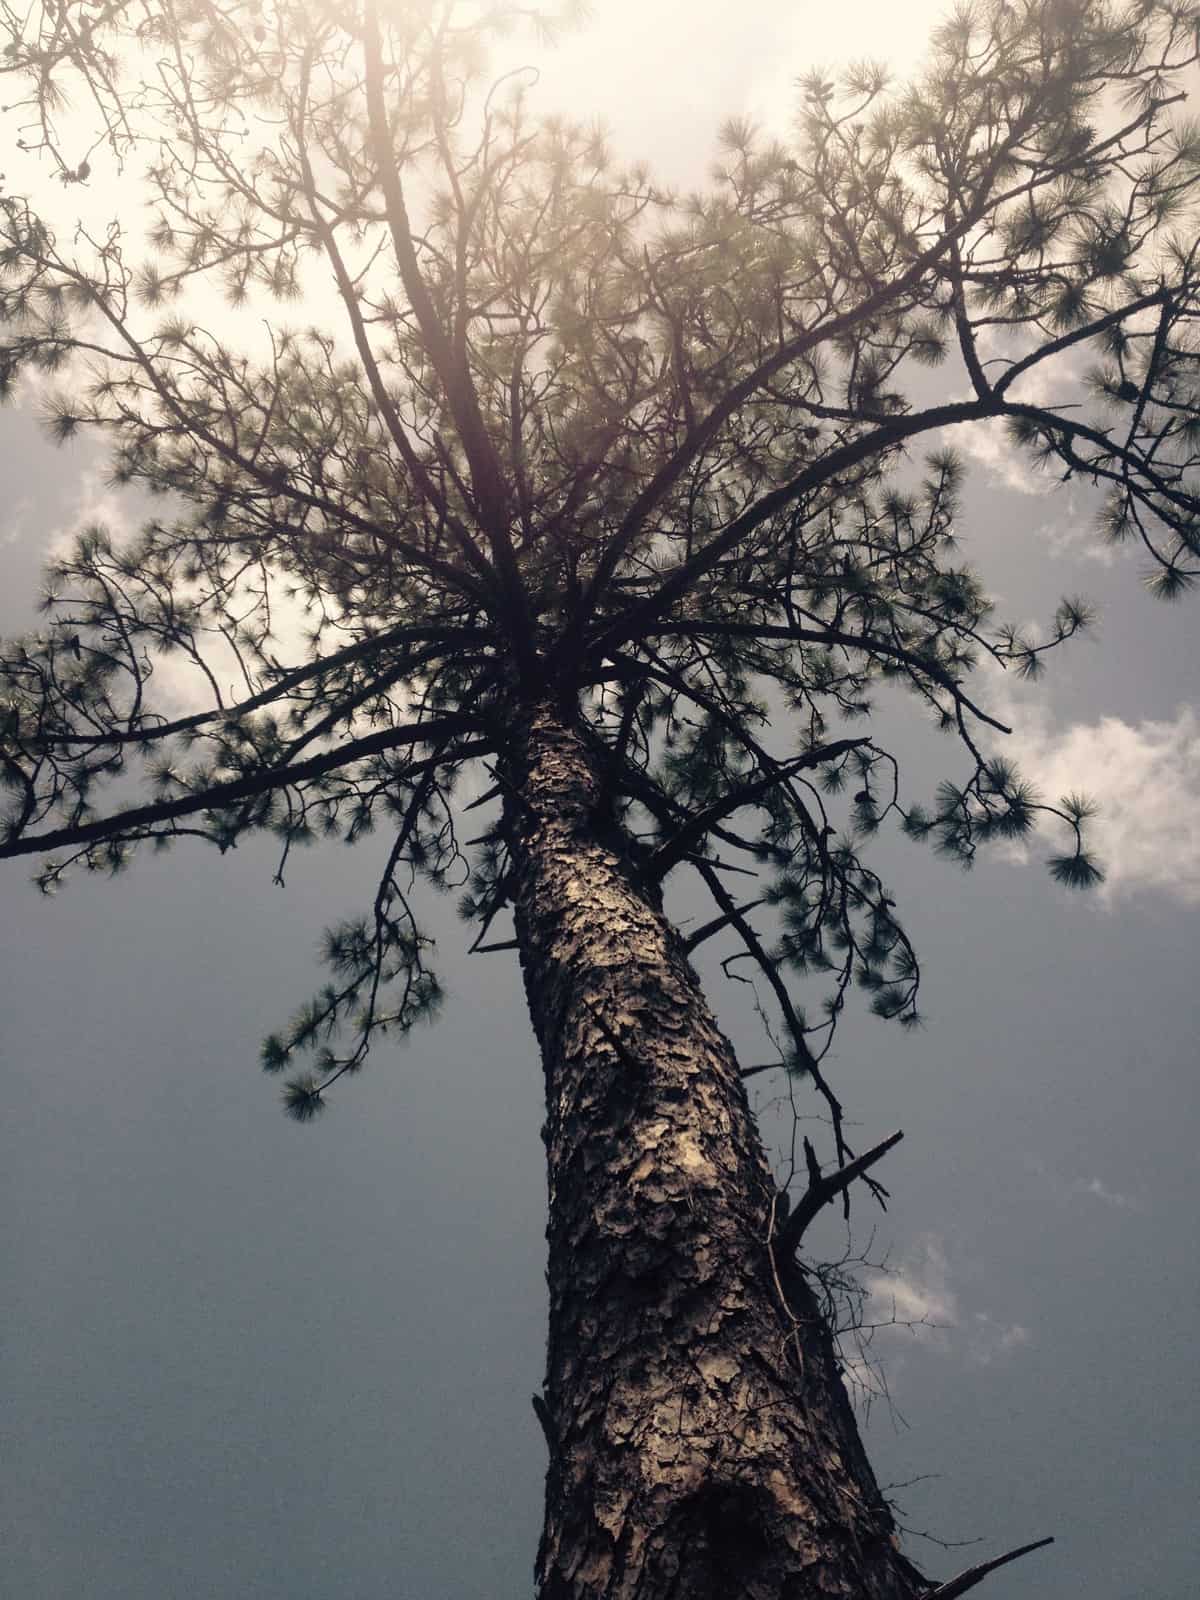 Tall Pine